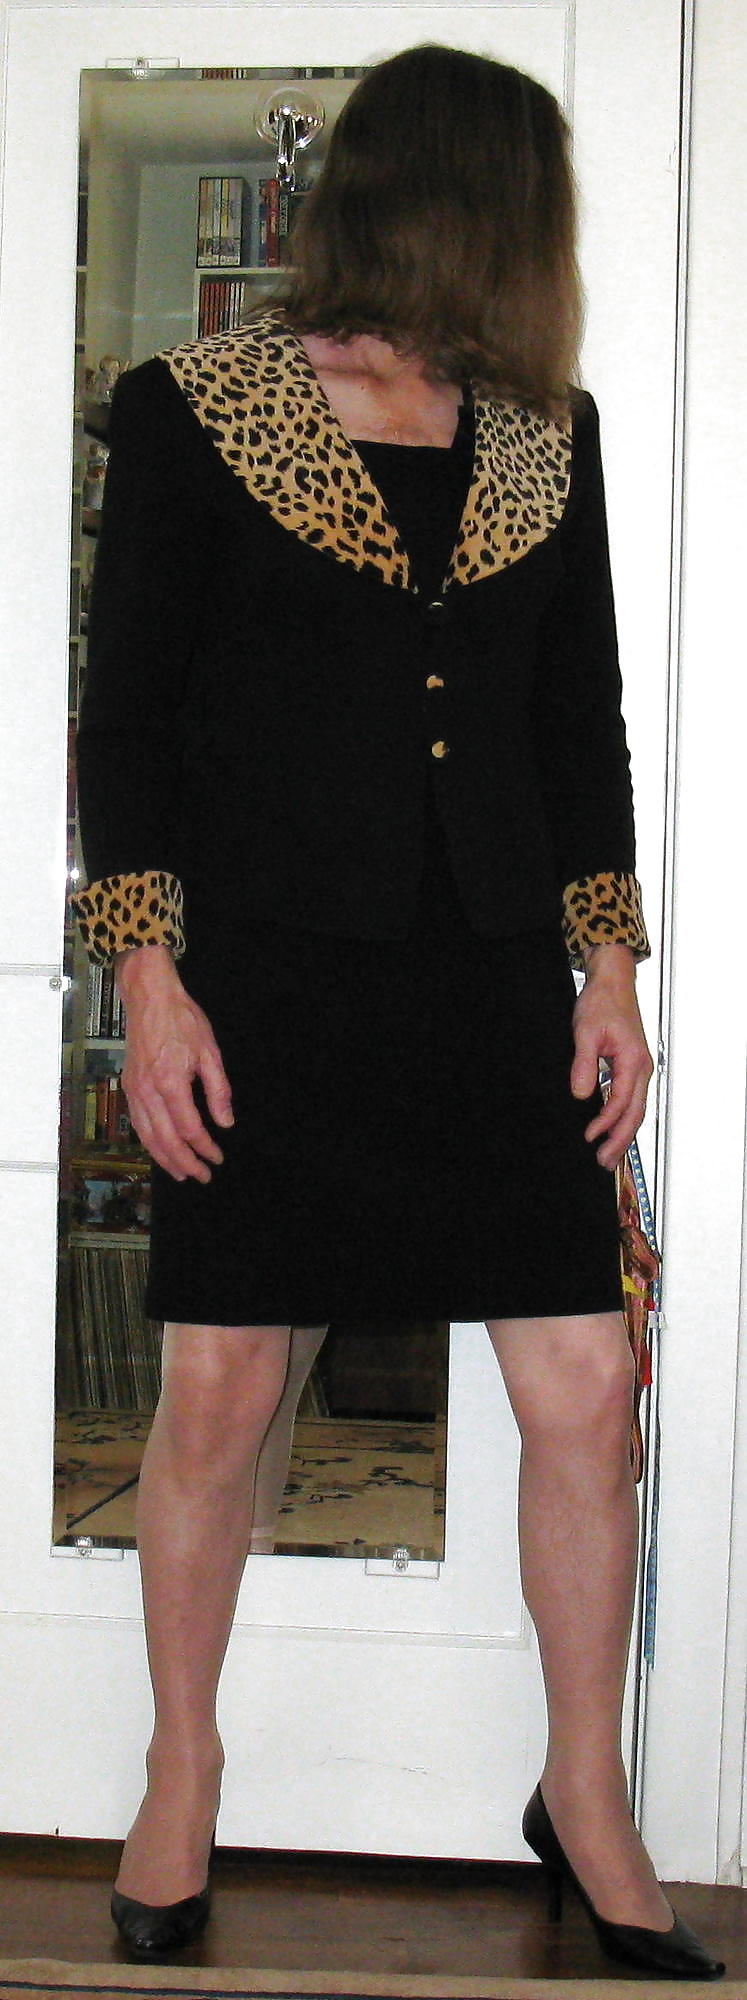 Crossdressing - ragazza leopardo
 #7202726